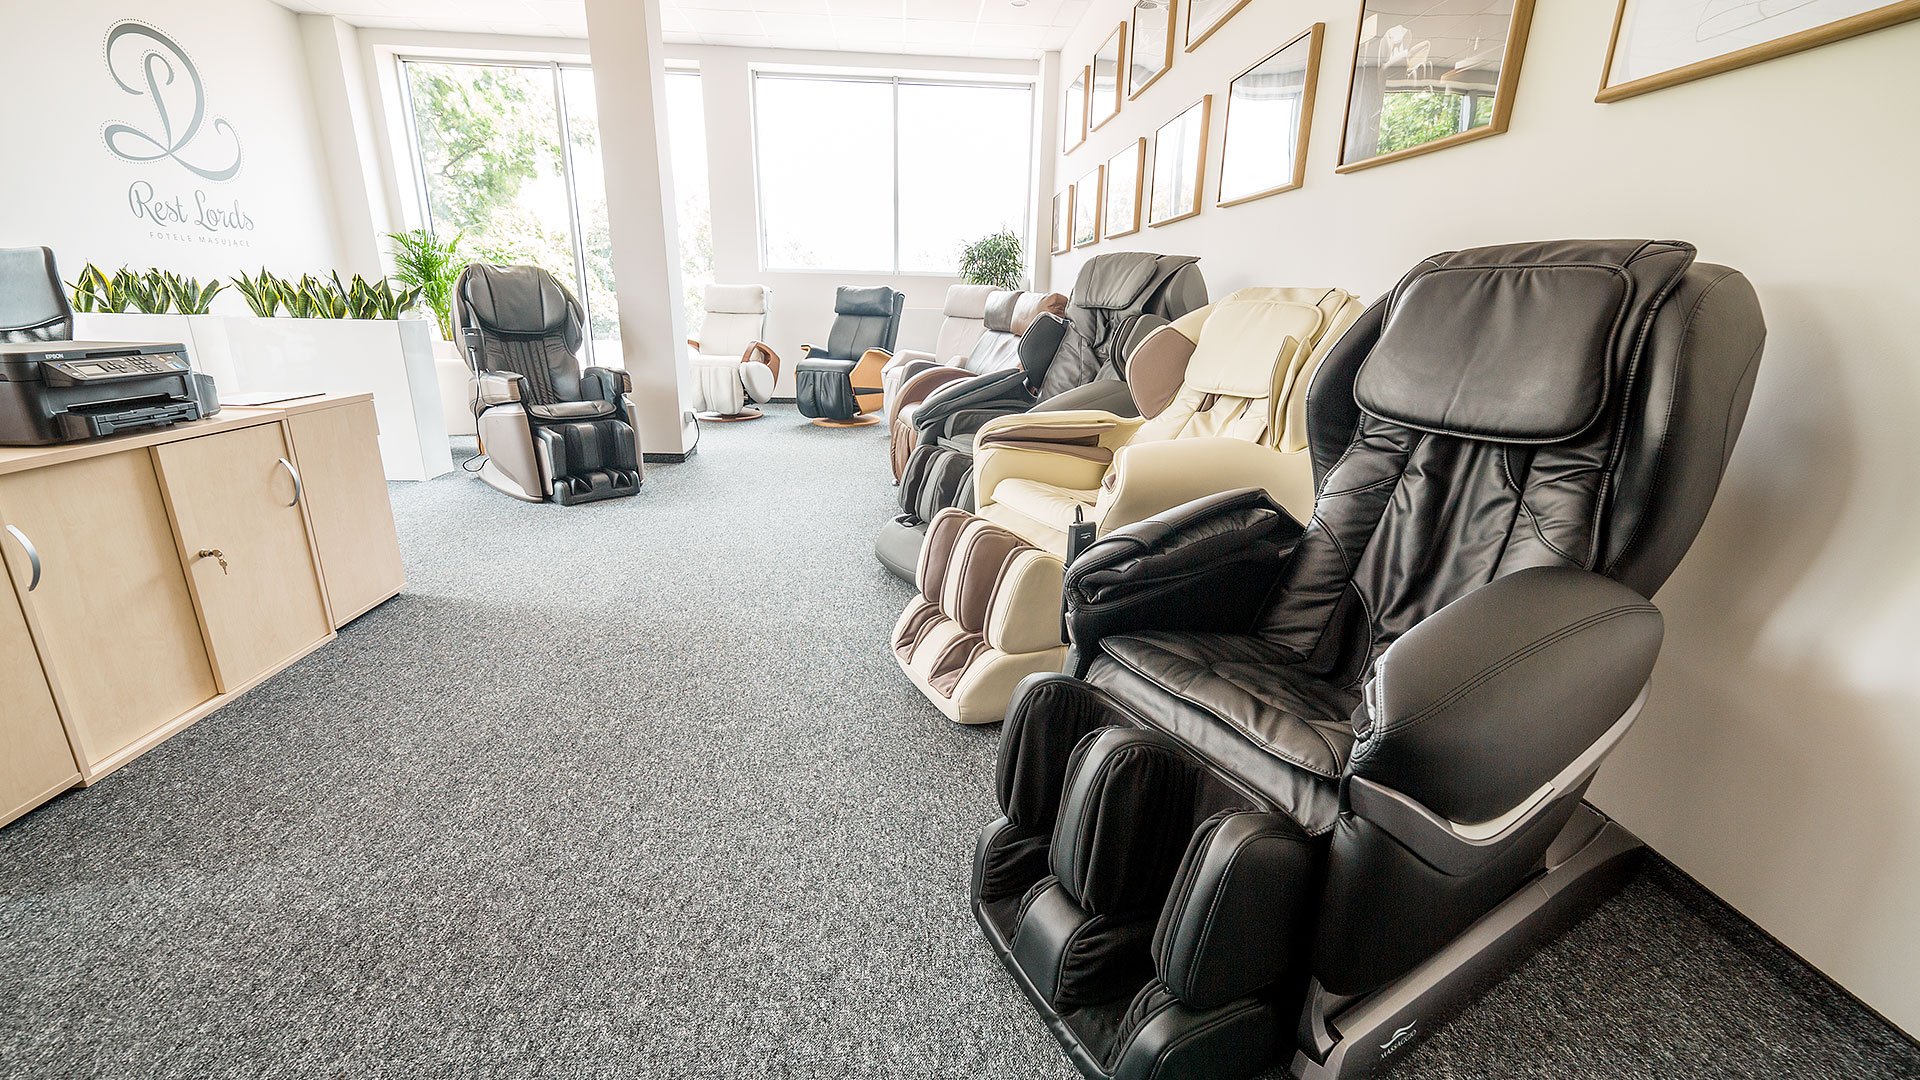 New massage chair salon Rest Lords in Olsztyn